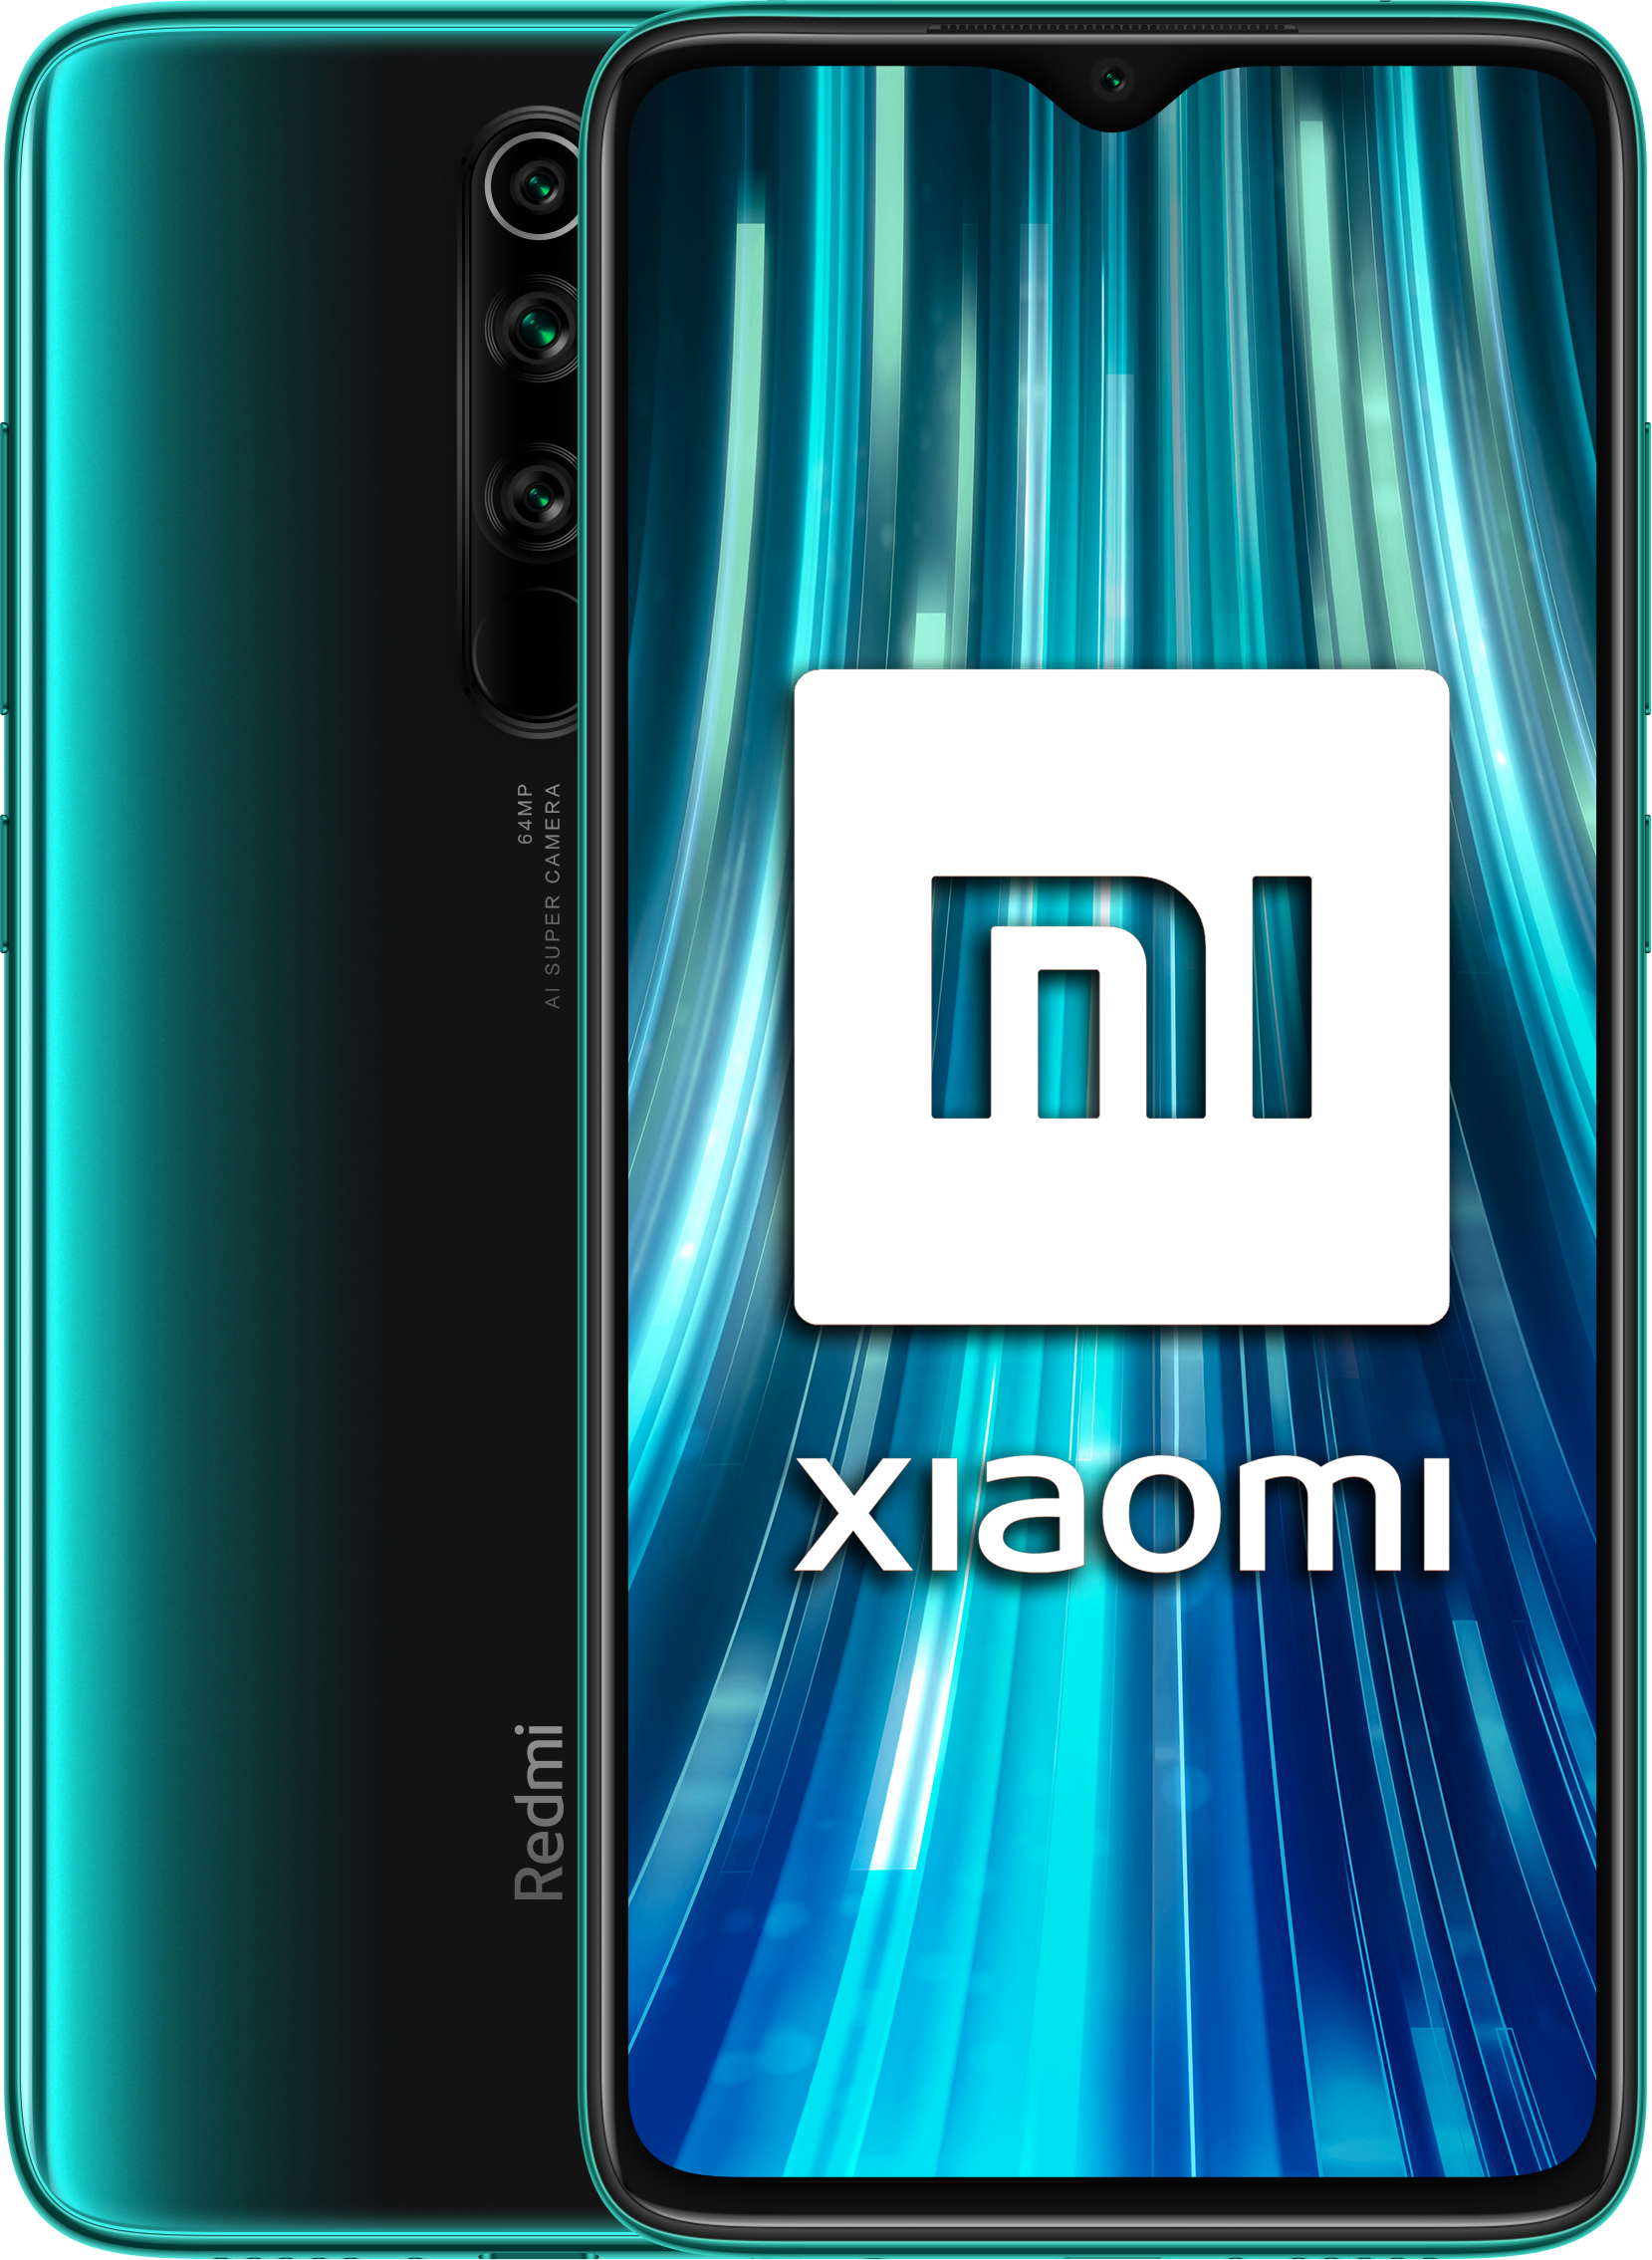 Xiaomi Redmi Note 8 pro verde 128 gb 6 ram 6.53 full hd+ helio g90t 4500 mah android smartphone de fhd+ rom 64 4g 6gb 128gb 128gb+6gb note8 653